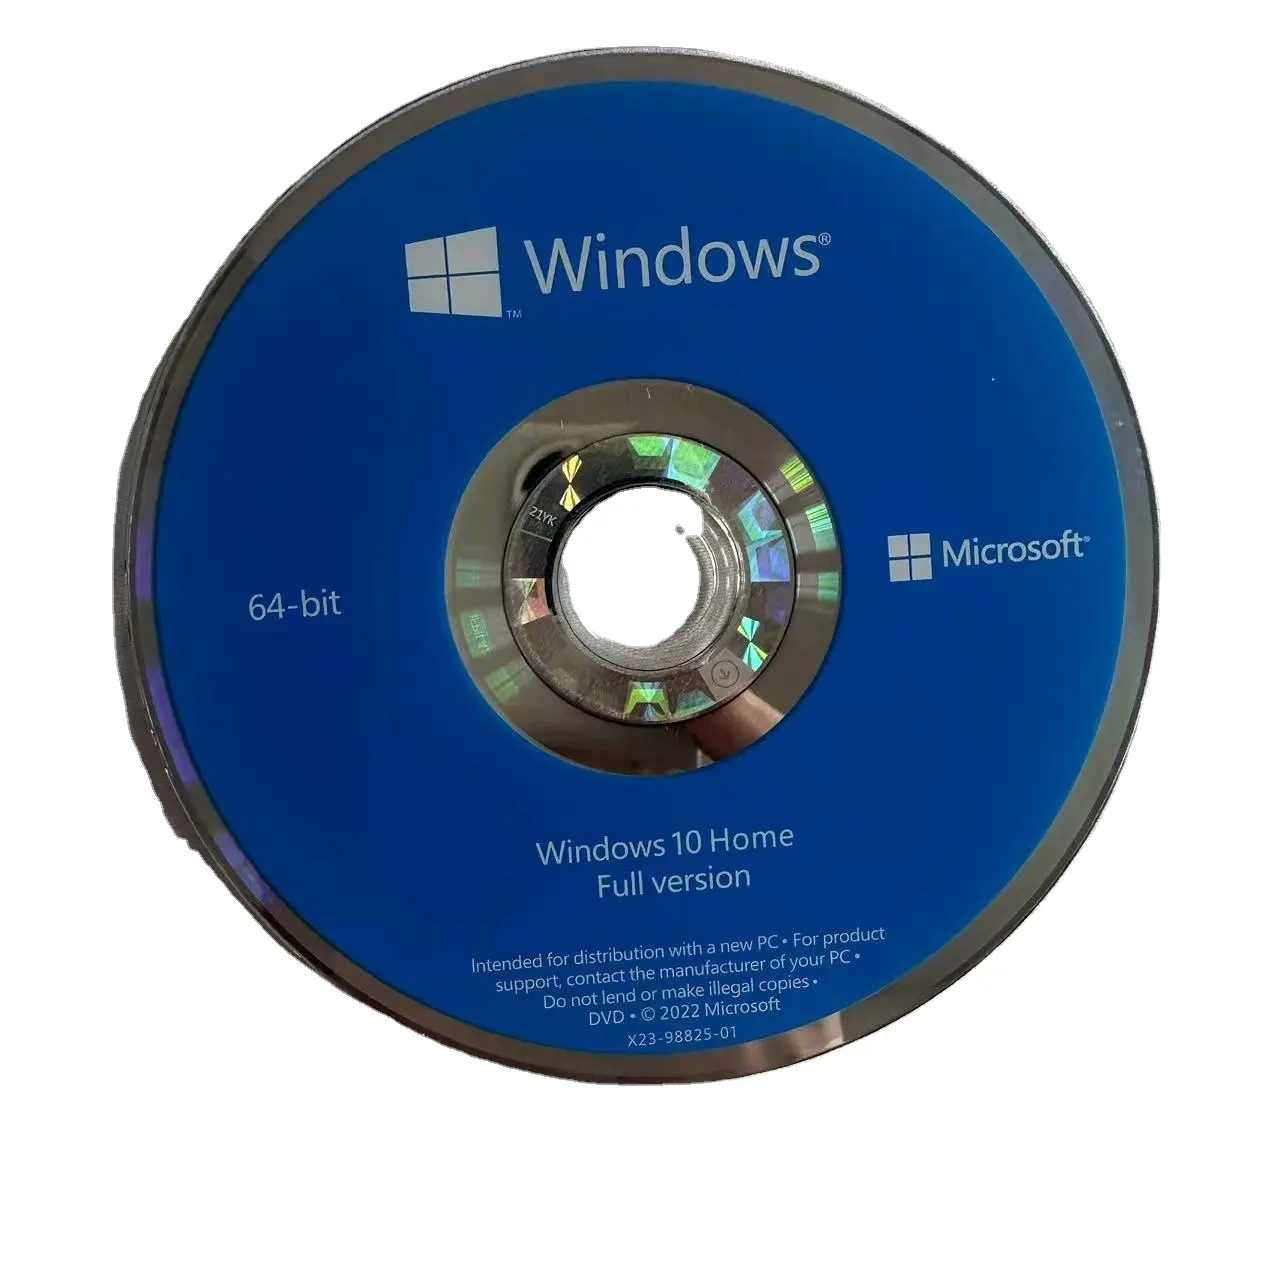 Microsoft Windows 10 домашний ключ полный пакет DVD 1 набор = 5 шт. многоязычных Windows 10 Home Dsp Windows 10 Home DVD